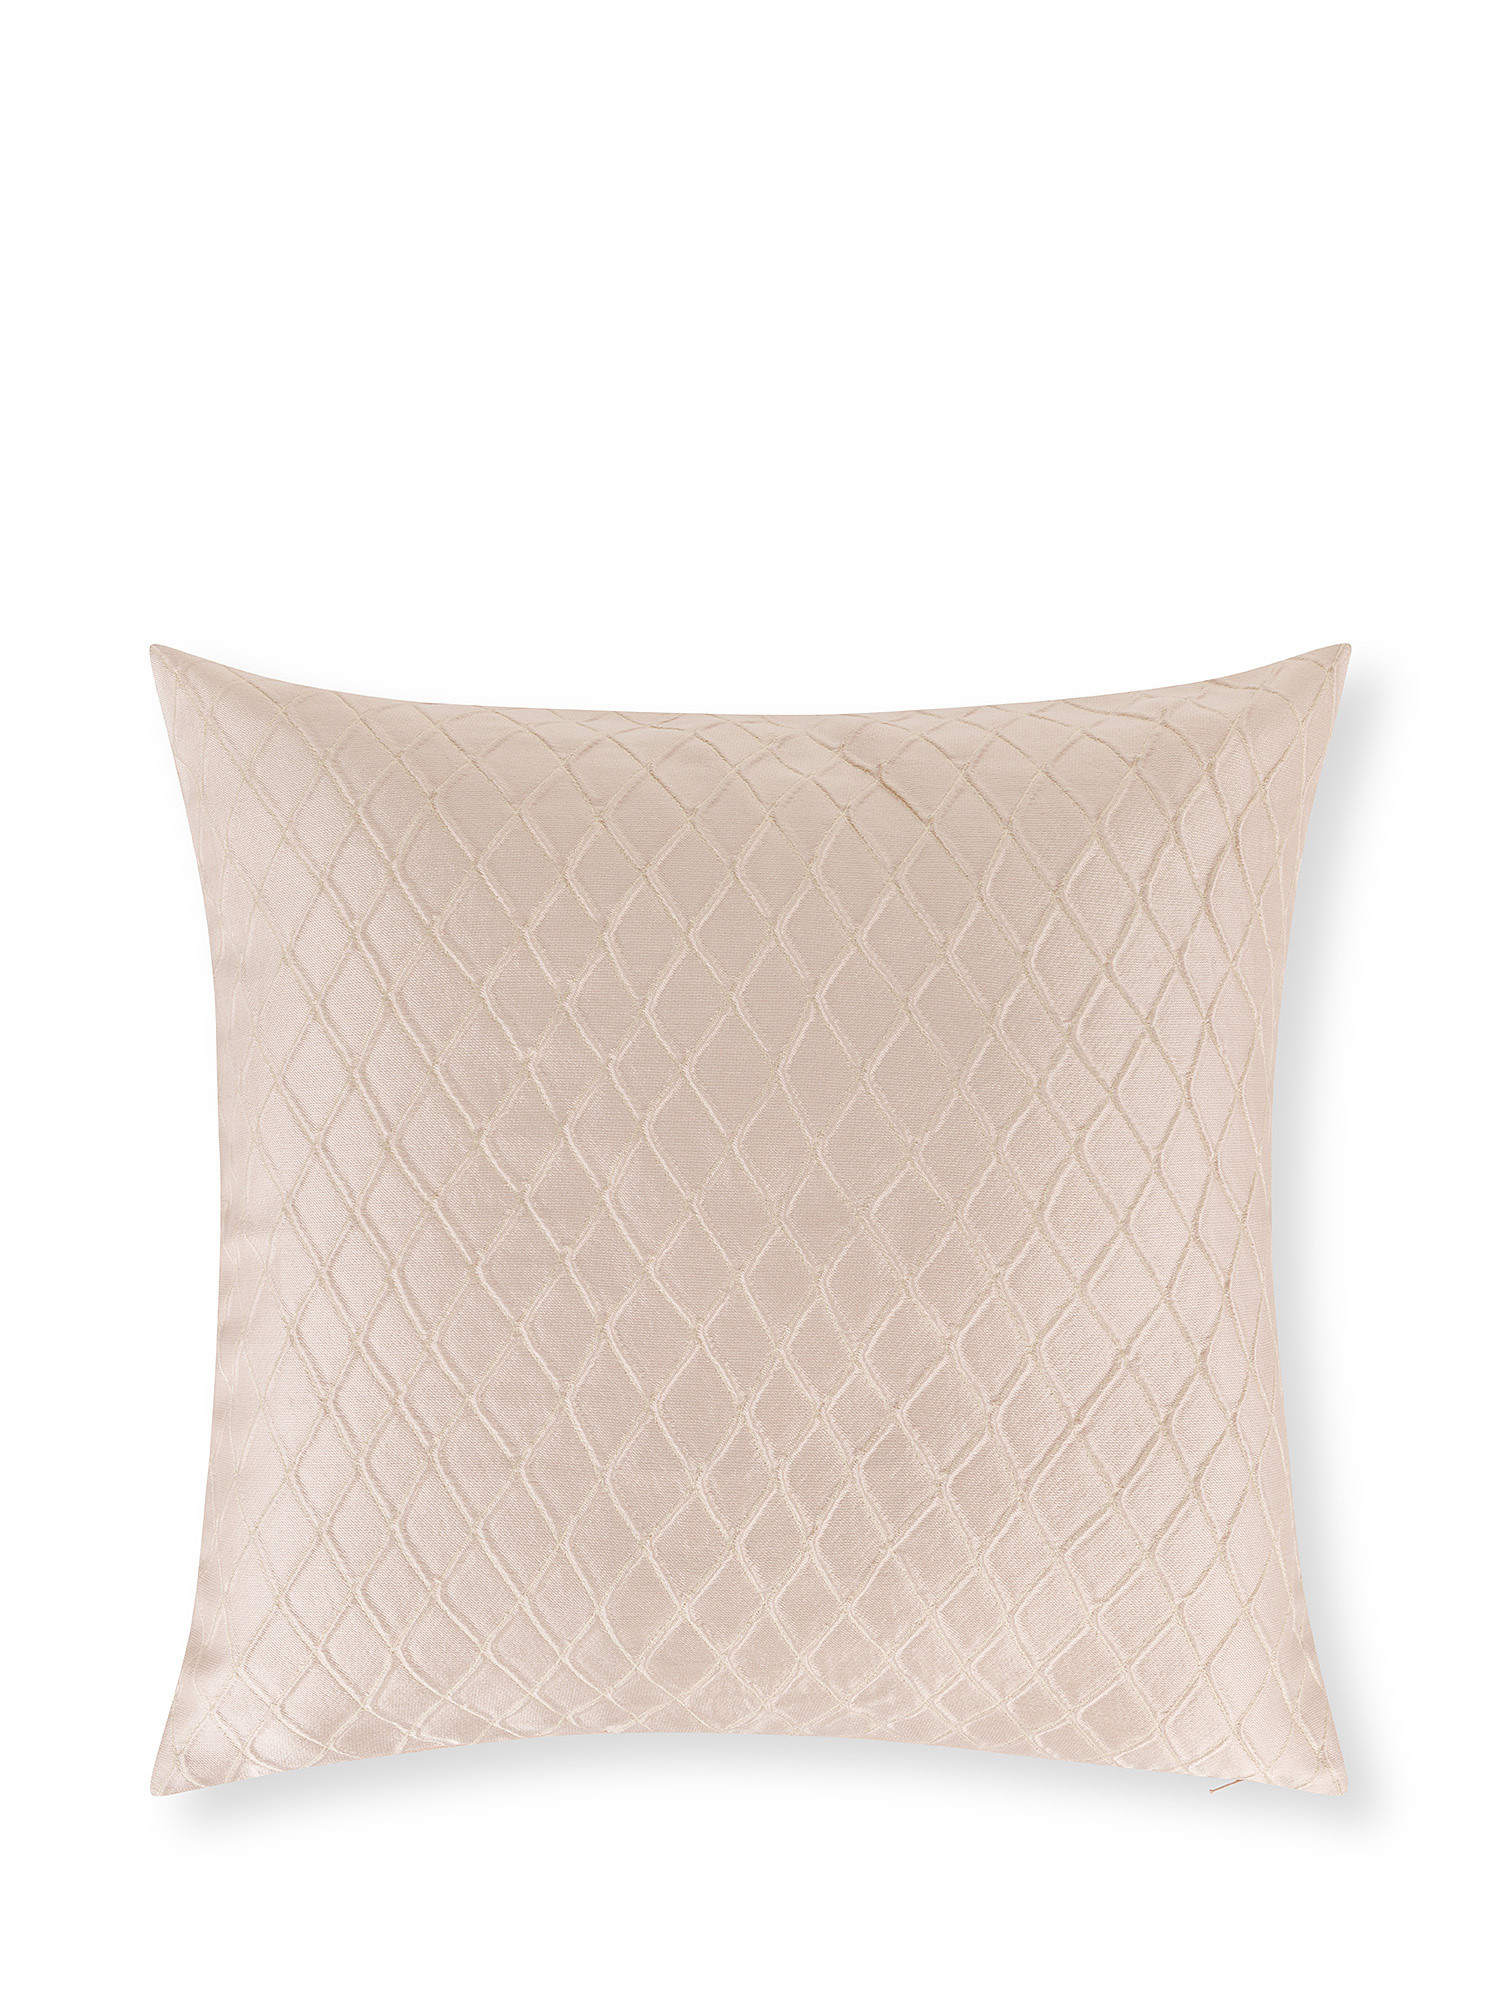 Jacquard cushion with rhombus motif 45x45cm, Pink, large image number 1